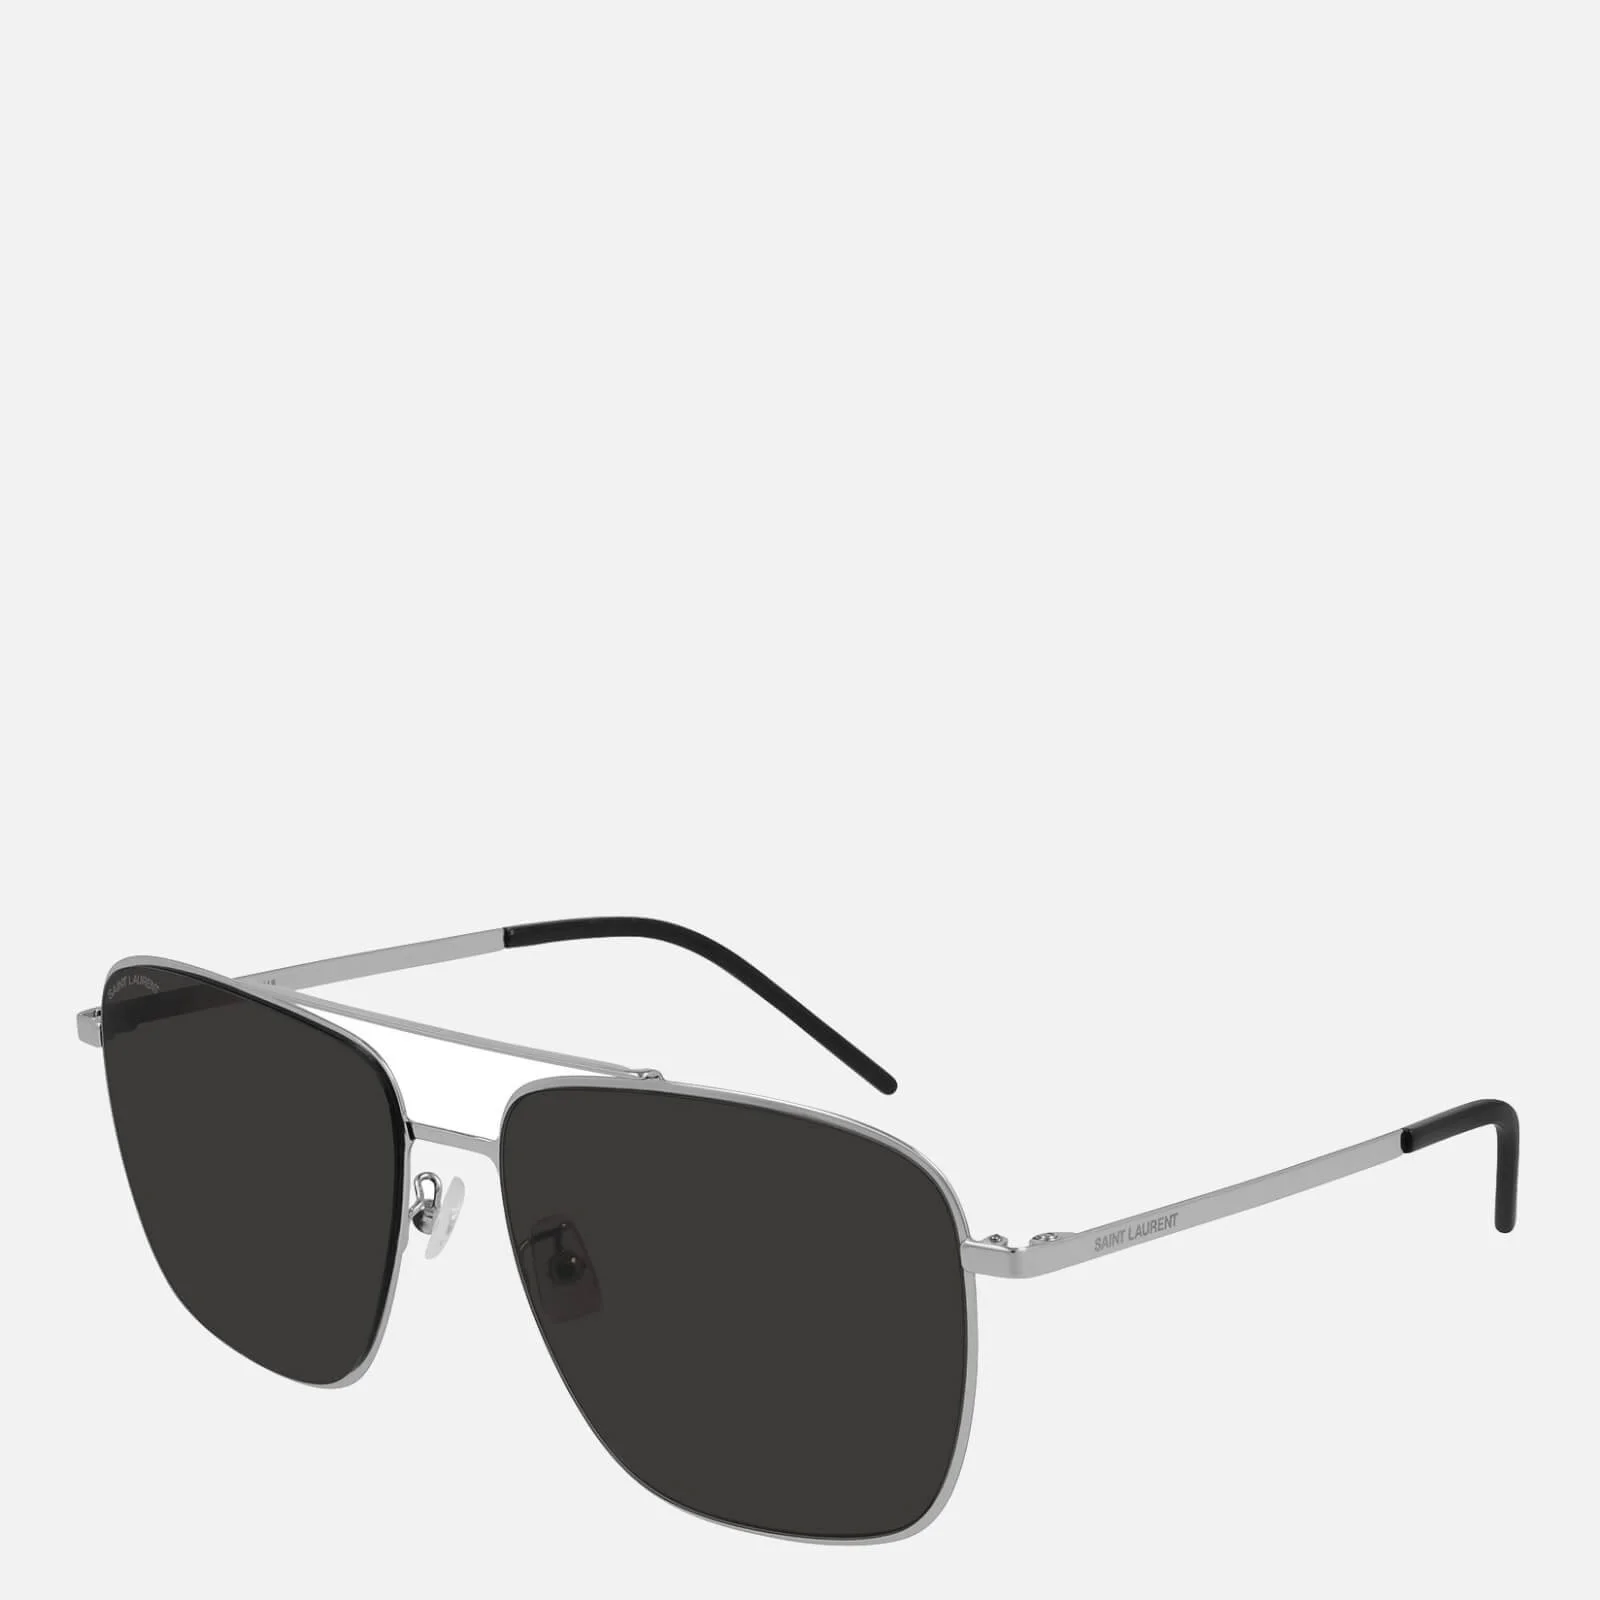 Saint Laurent Women's Slim Aviator Sunglasses - Silver/Black Image 1